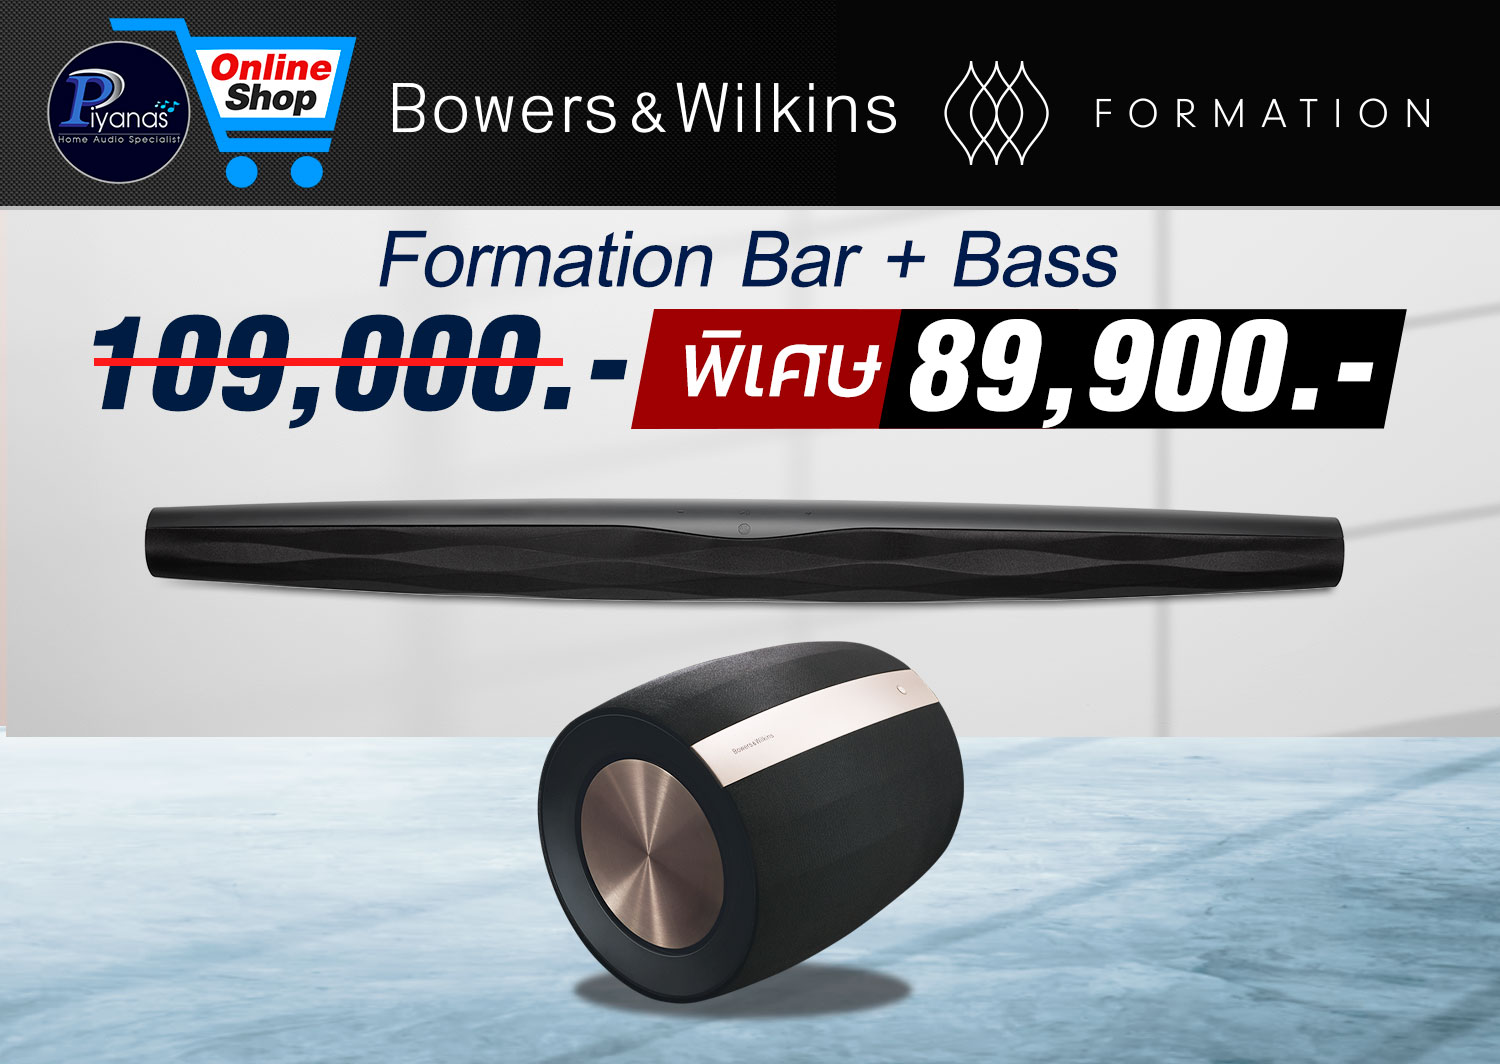 Formation Bar + Formation Bass
(Black)